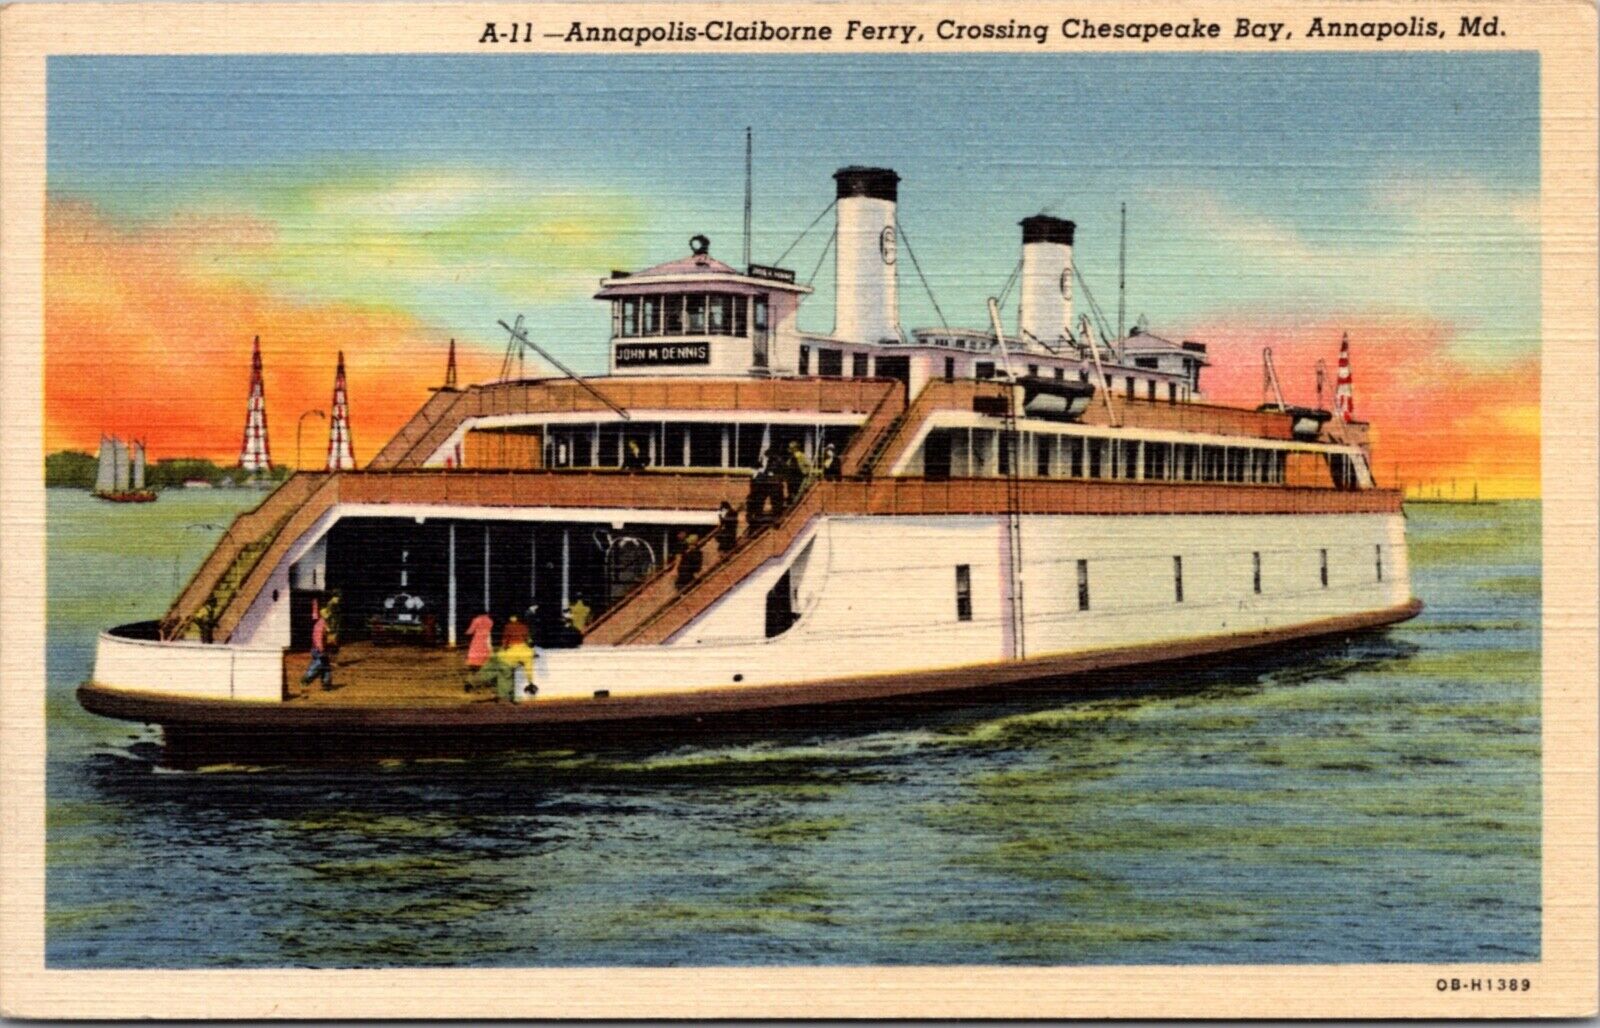 Linen PC Annapolis-Claiborne Ferry Crossing Chesapeake Bay Annapolis, Maryland